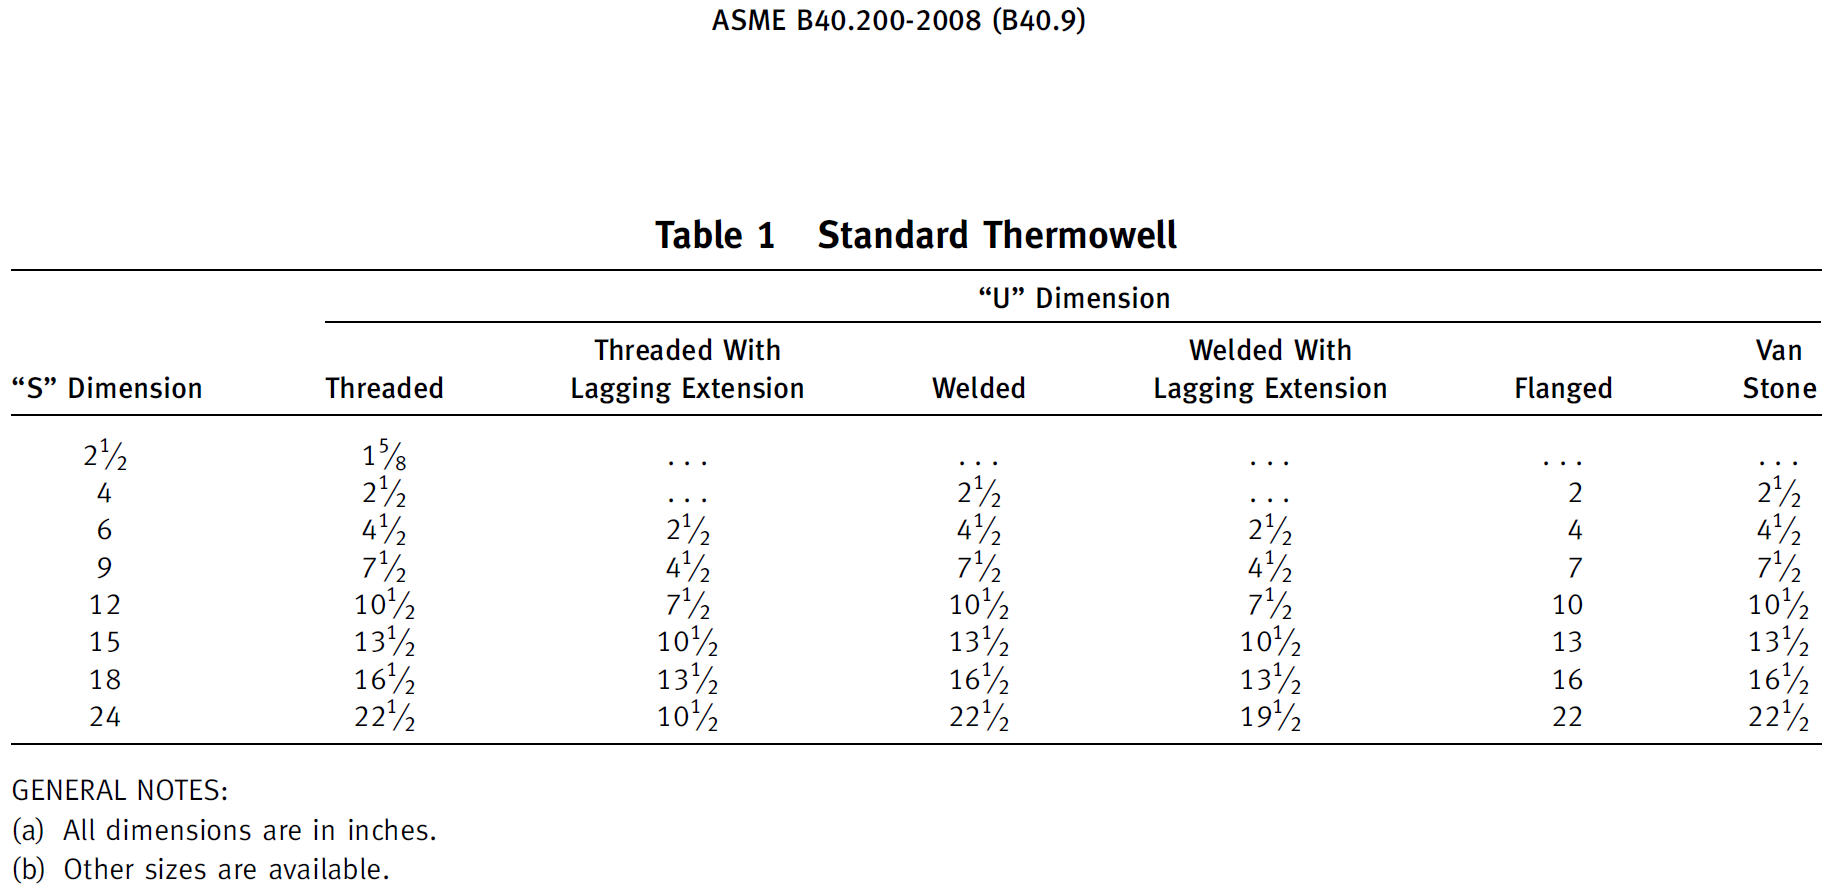 Standard Thremowell Dimensions